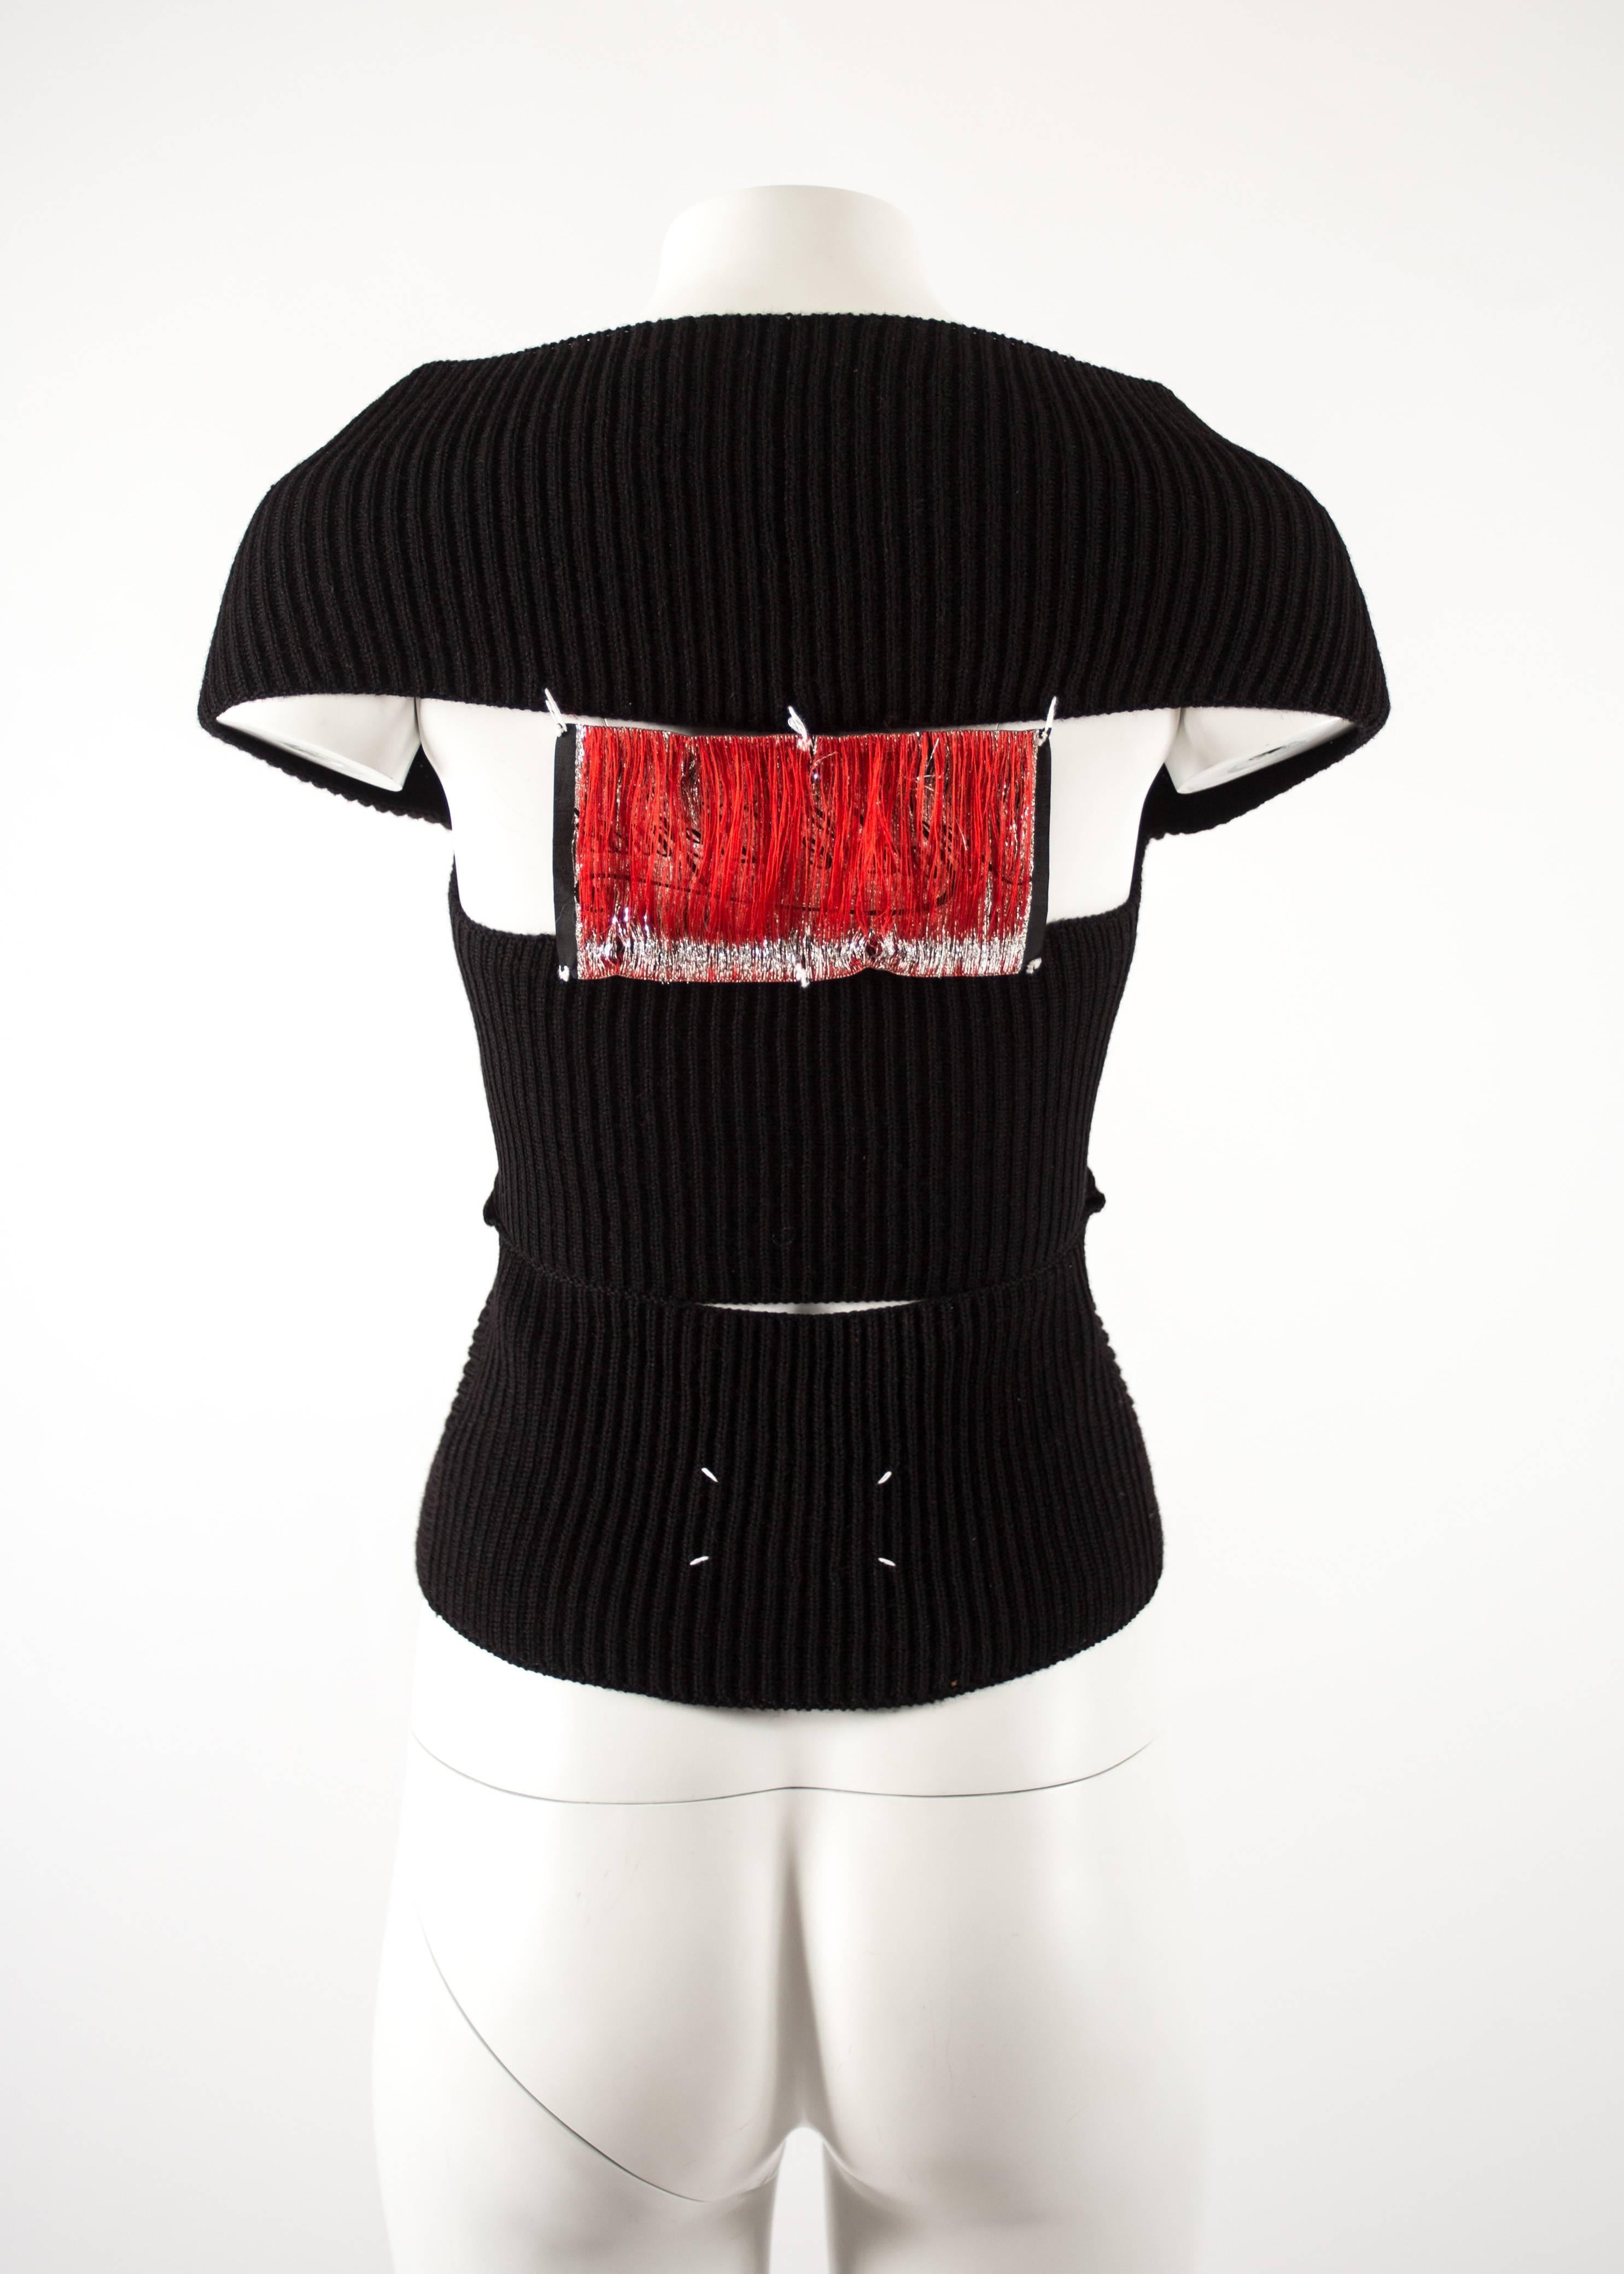 Maison Martin Margiela Autumn-Winter 2004 rib knit black cardigan with 
red lurex patchwork